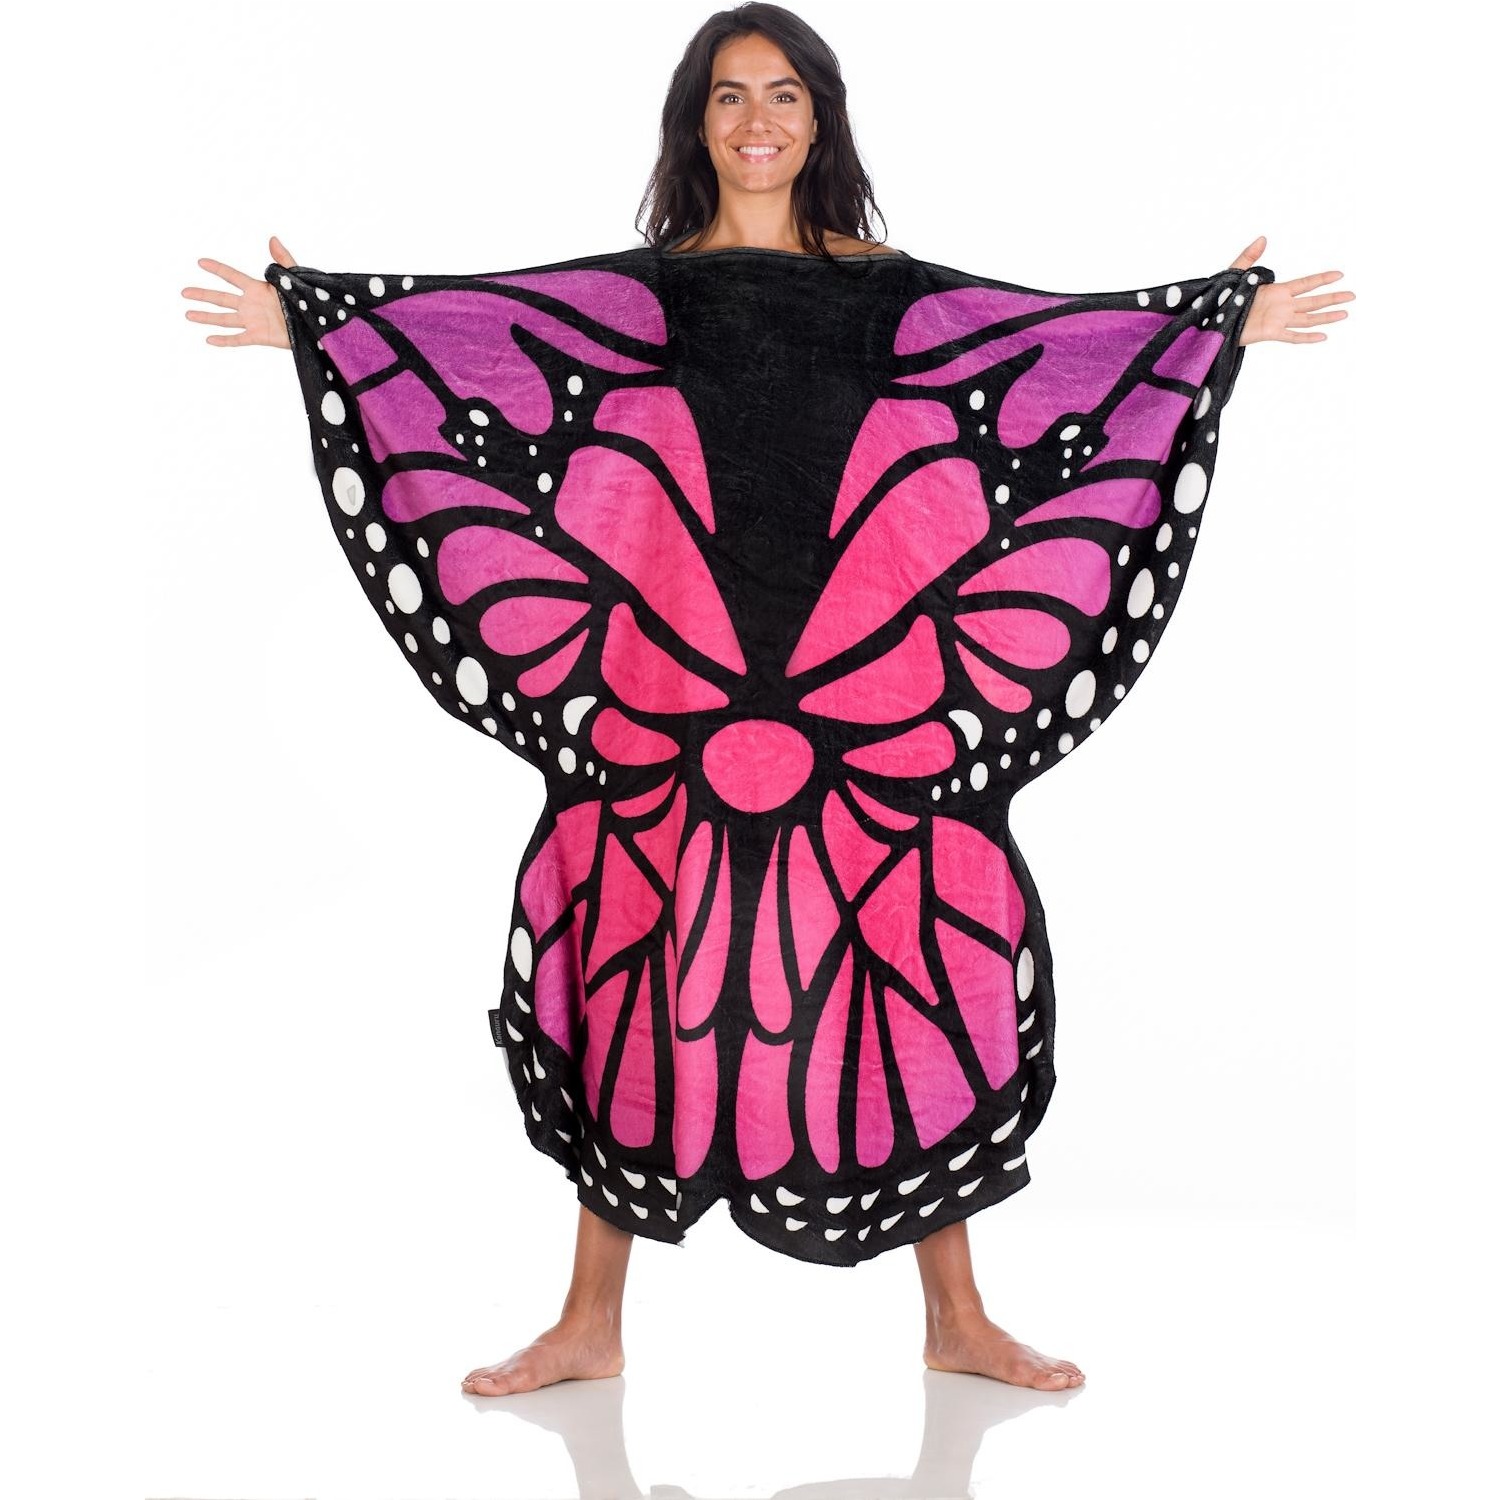 Coperta indossabile Kanguru fantasia Butterfly Blanket dimensione